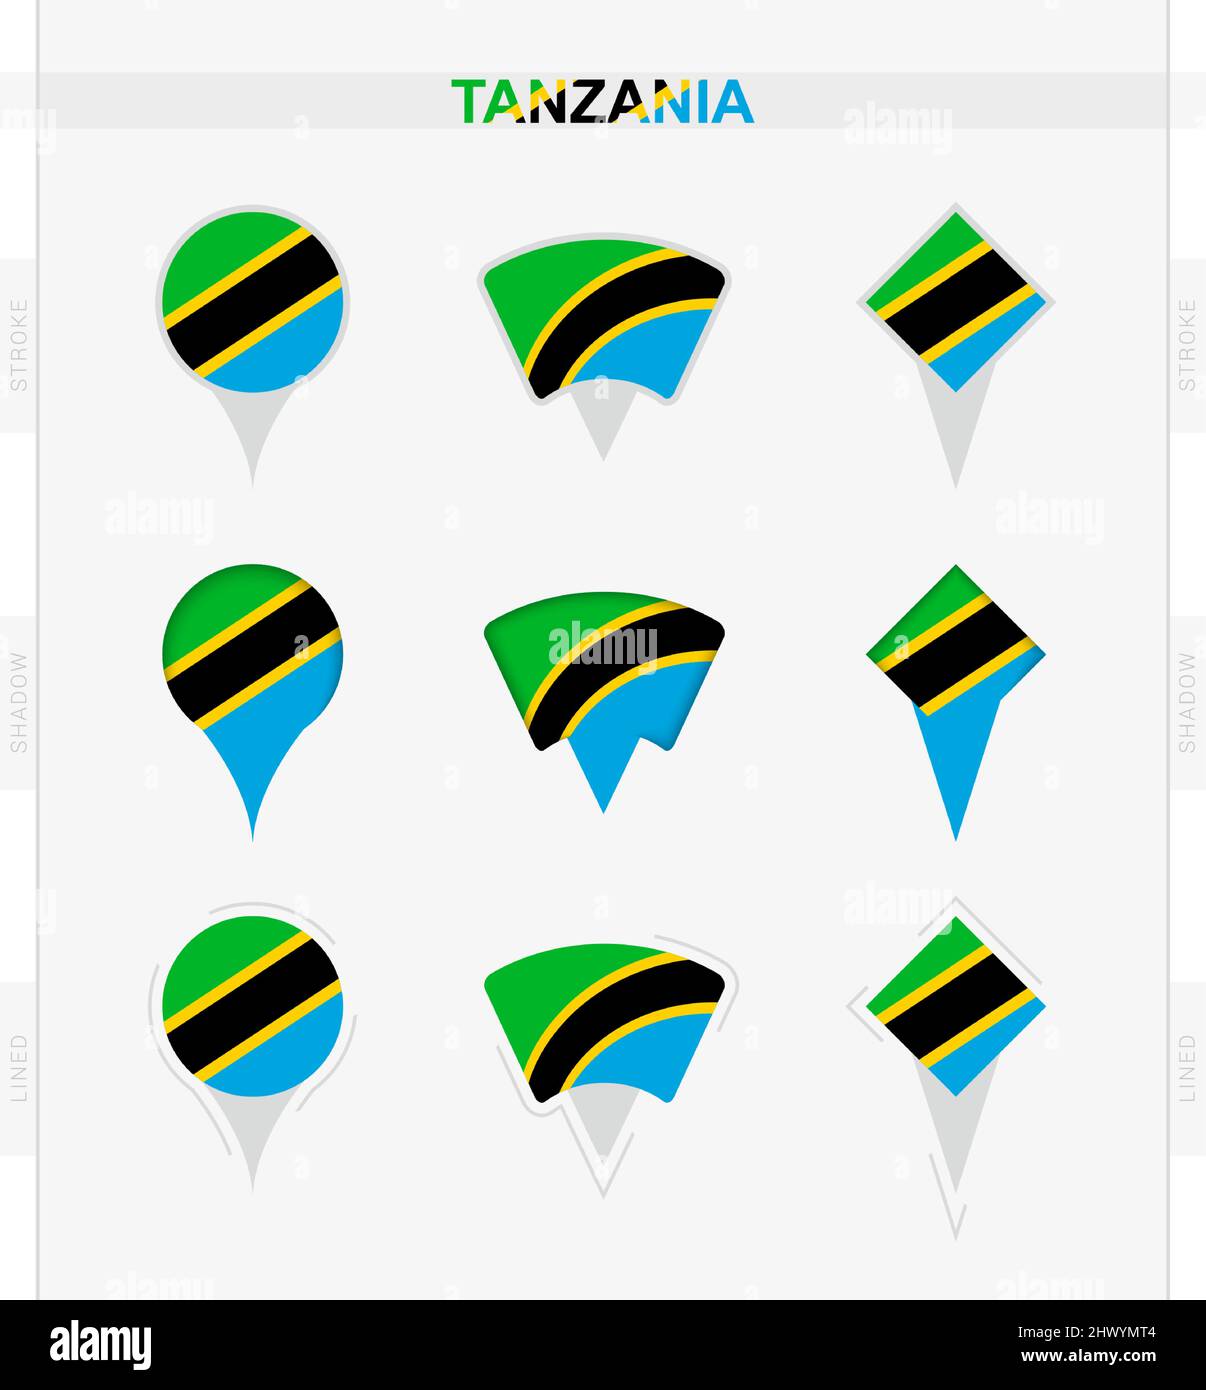 Tanzania flag, set of location pin icons of Tanzania flag. Vector illustration of national symbols. Stock Vector